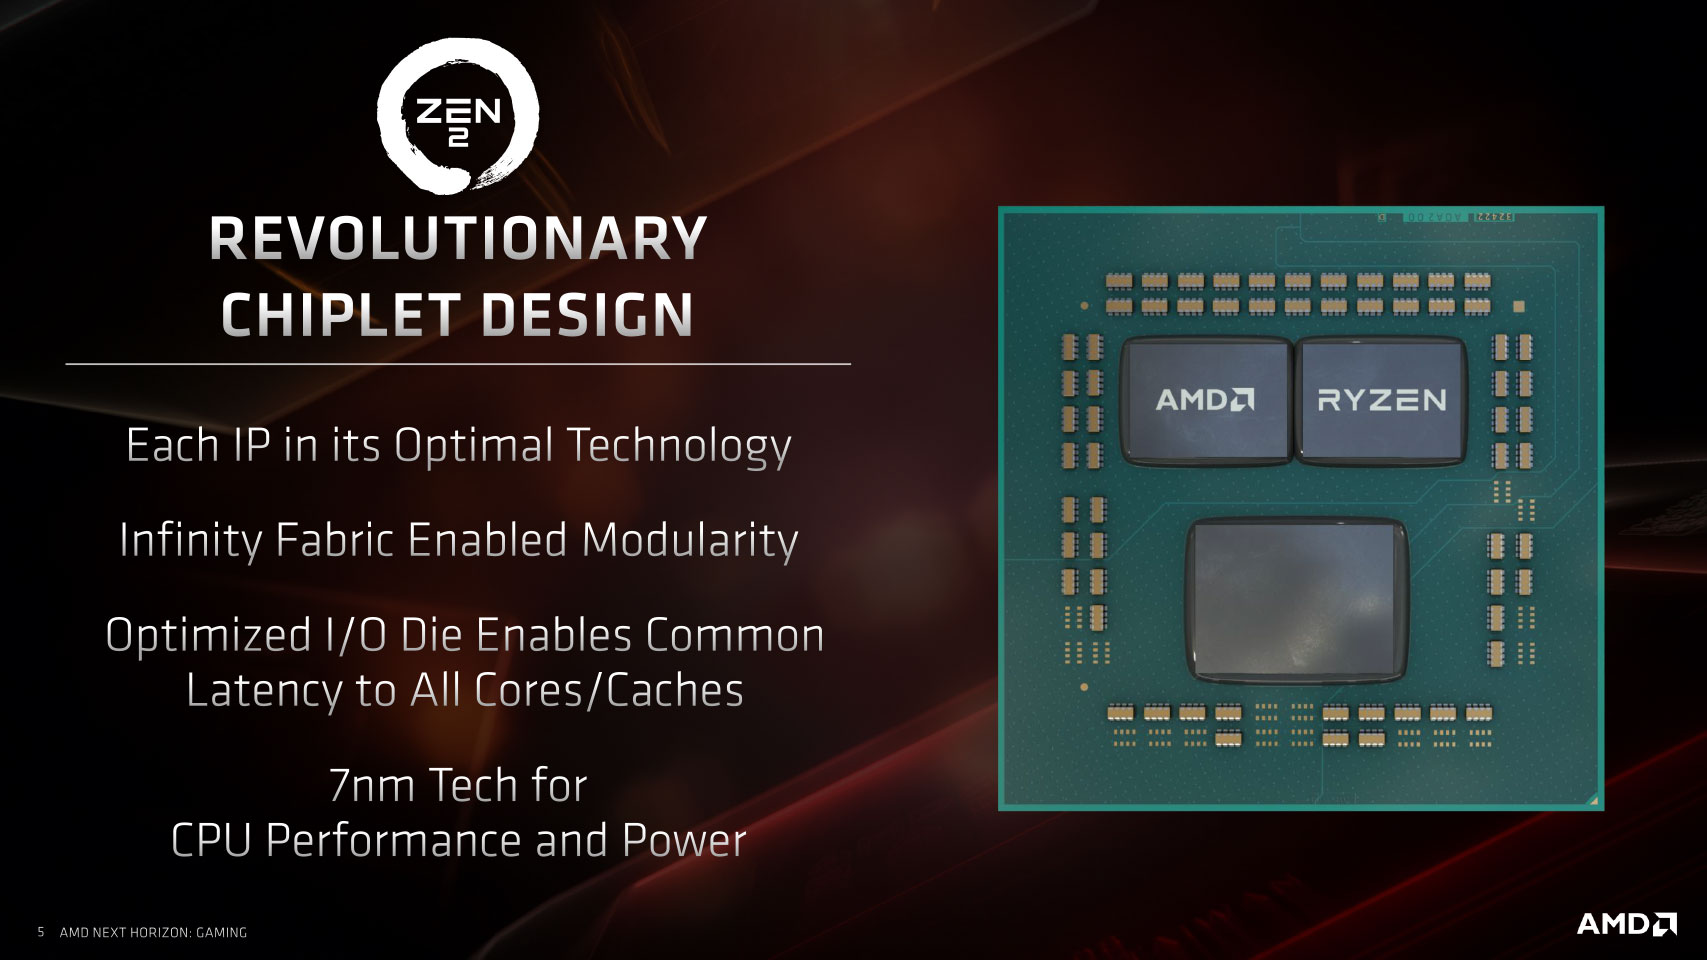 AMD Ryzen 7 3700X review